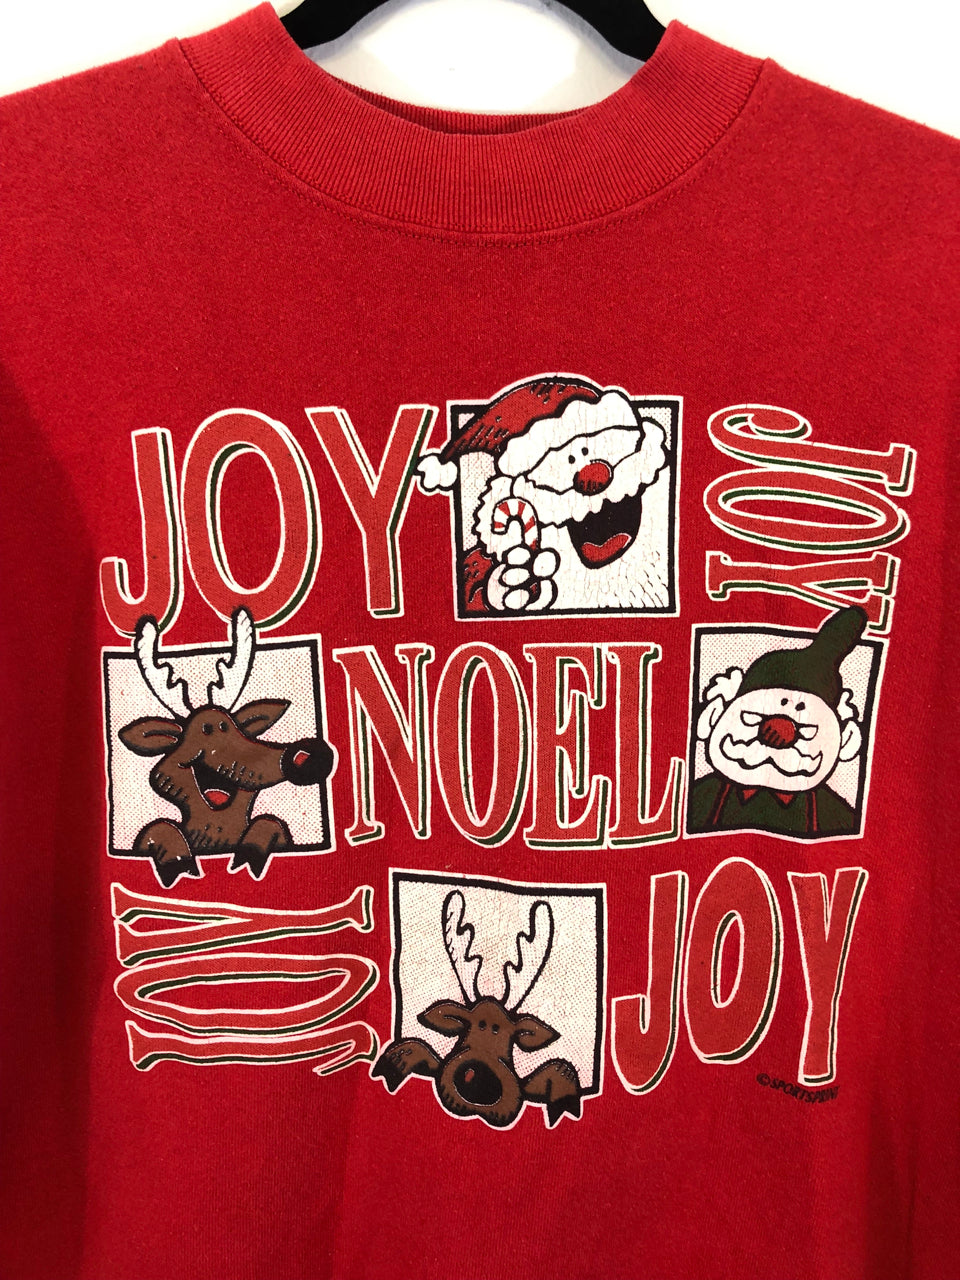 Joy Noel Joy Holiday Sweatshirt